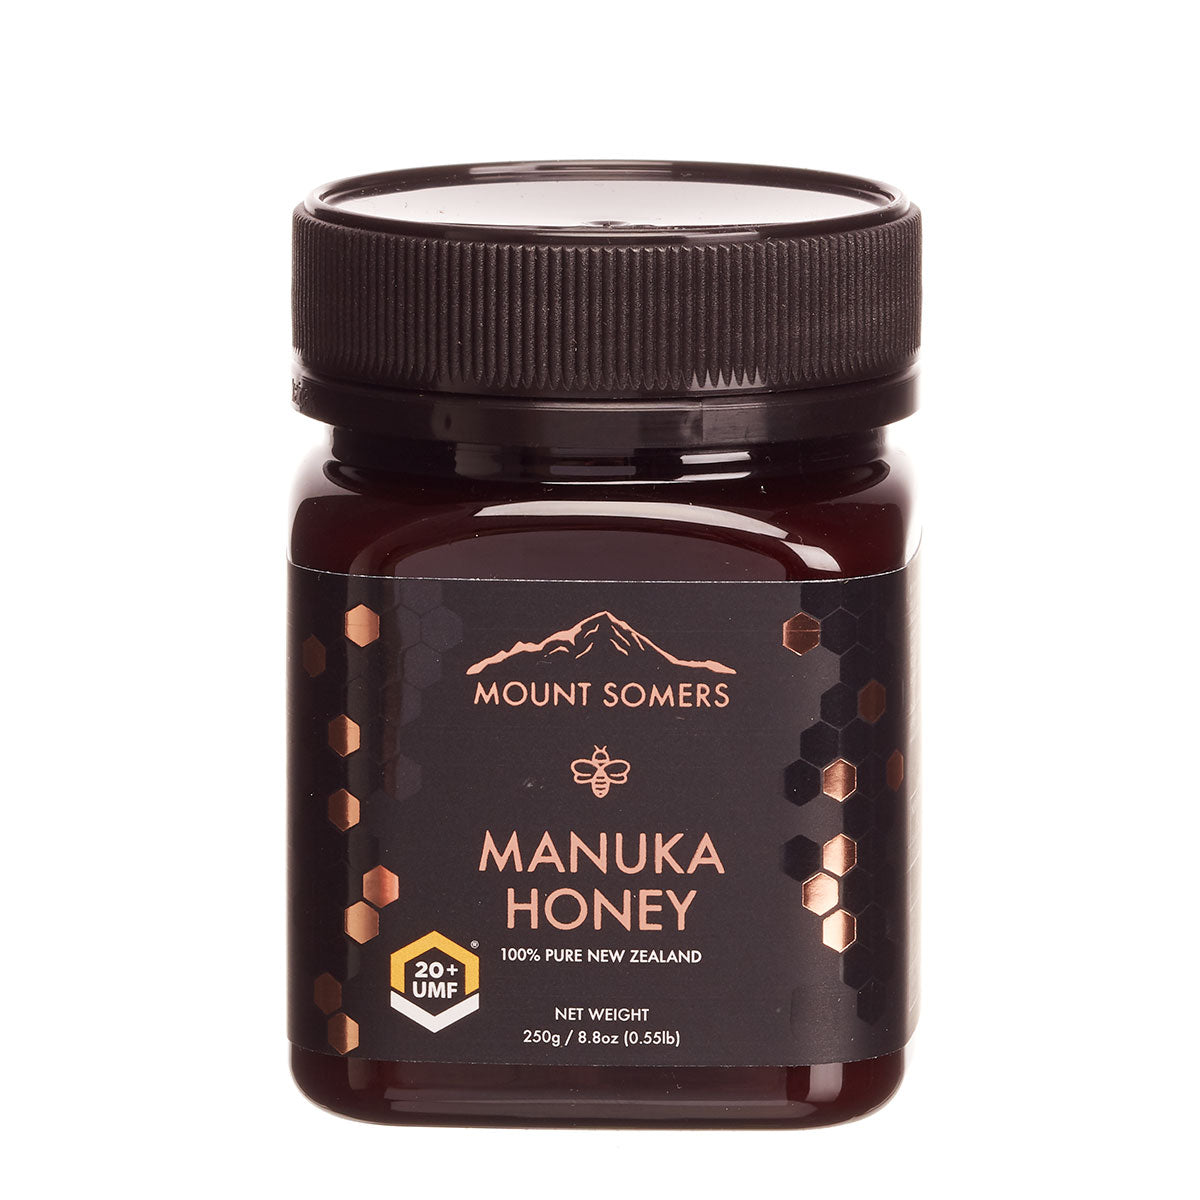 Manuka honey research report